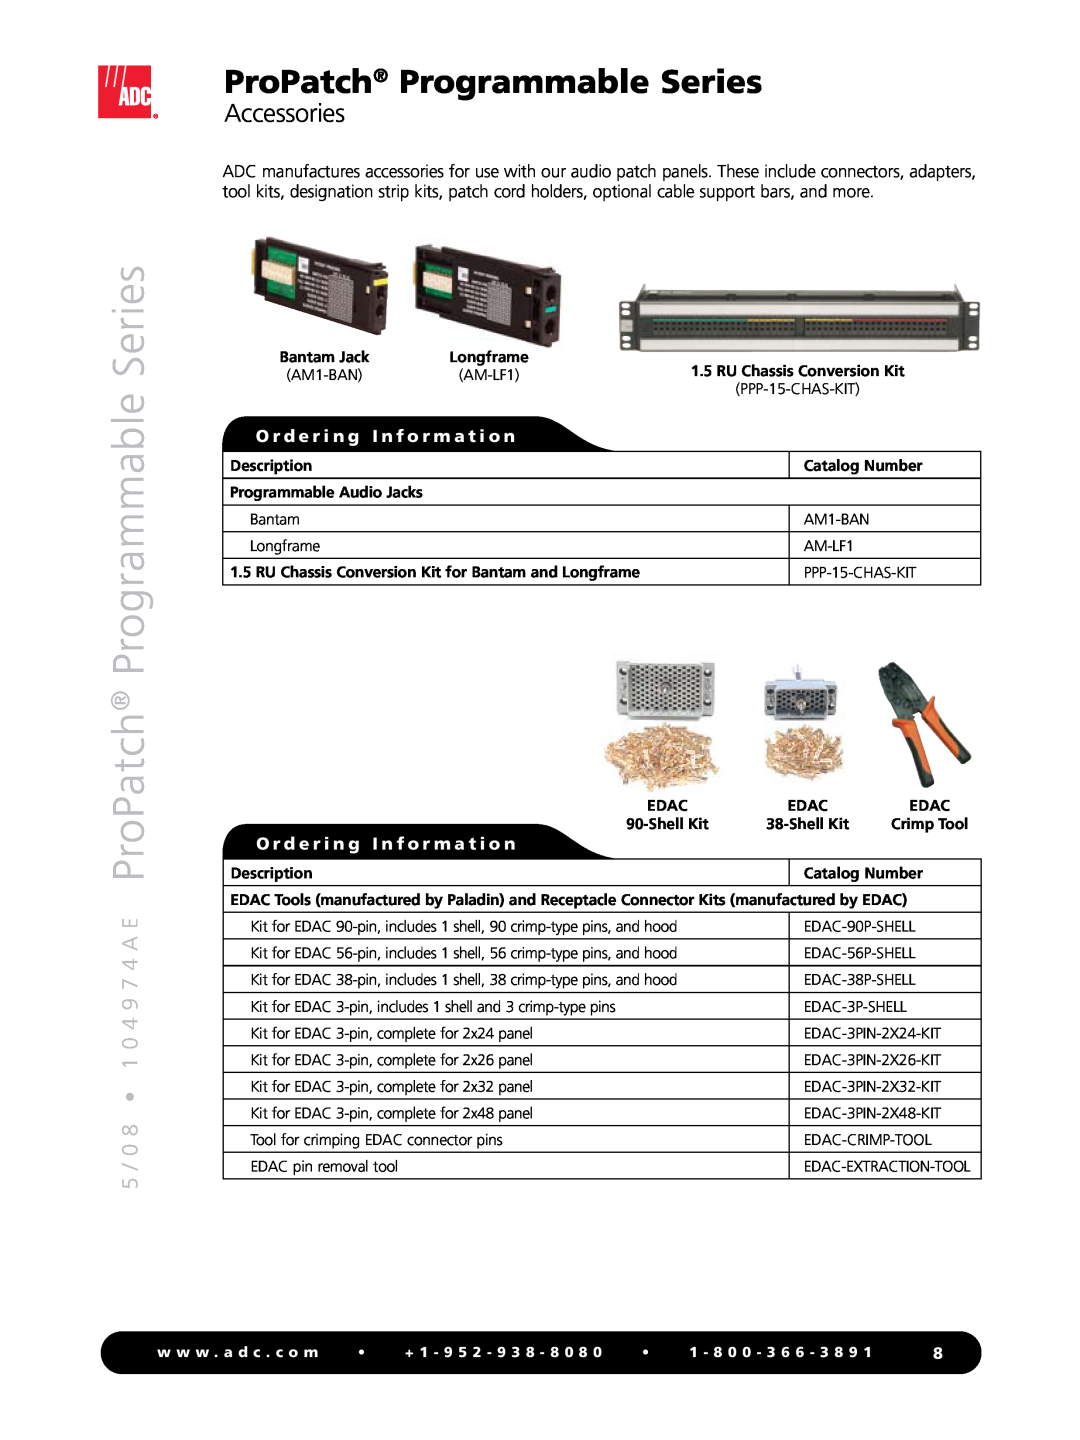 ADC manual Accessories, 5 / 0 8 1 0 4 9 7 4 A E ProPatch Programmable Series, O r d e r i n g I n f o r m a t i o n 